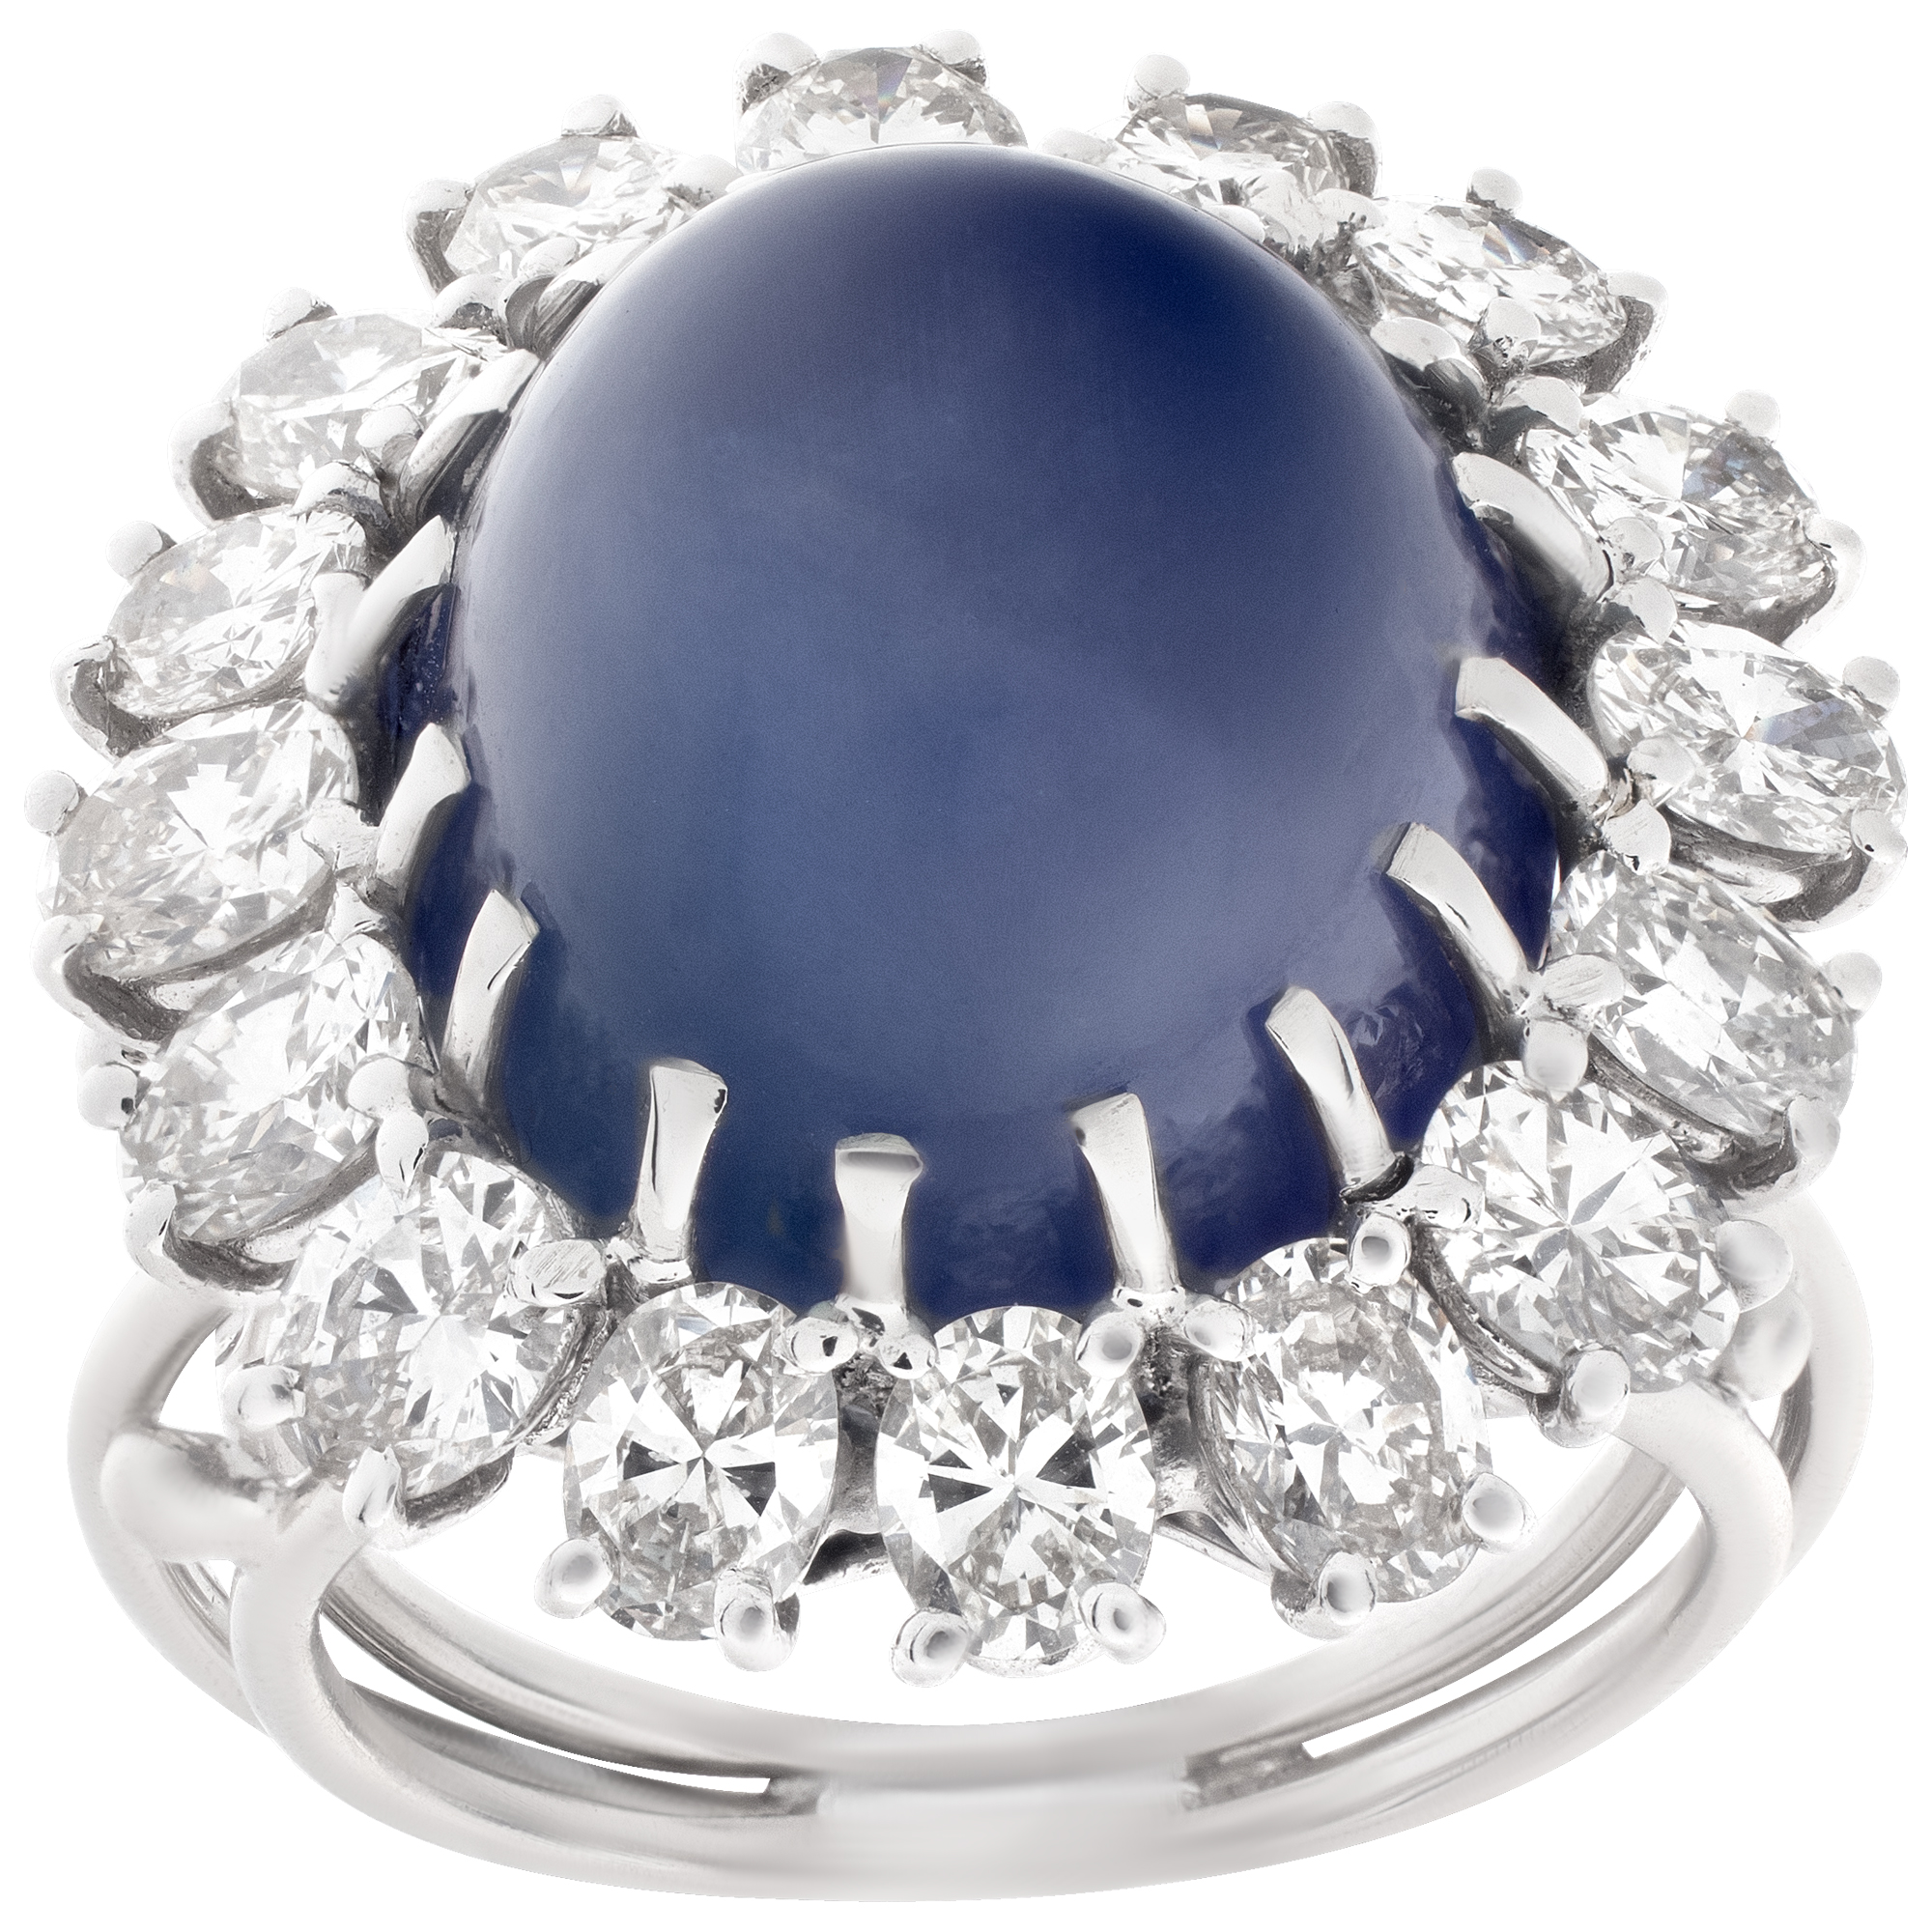 Cabochon star sapphire & oval brilliant diamonds ring set in platinum